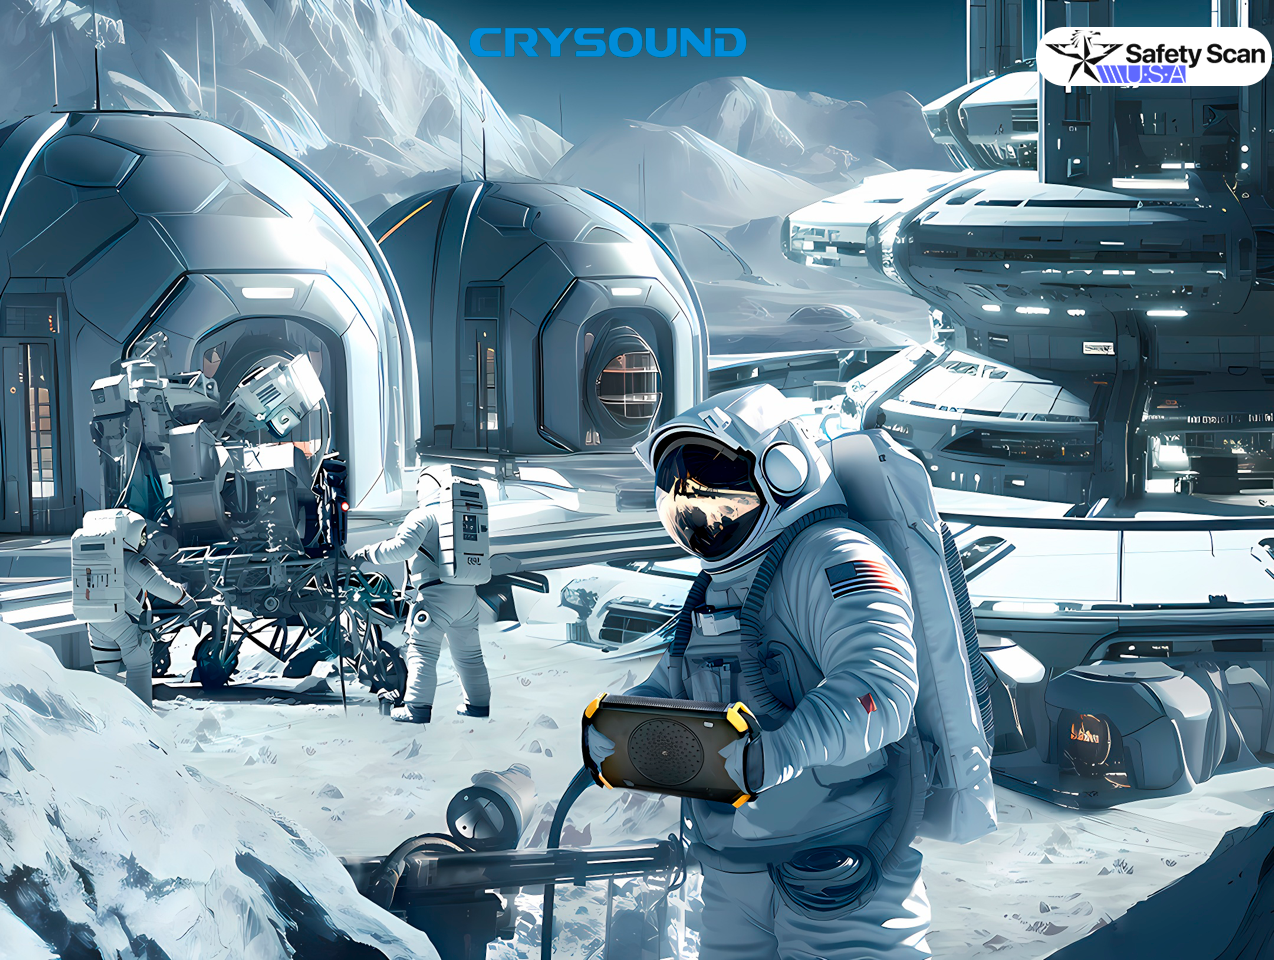 Crysound-The-Future-003